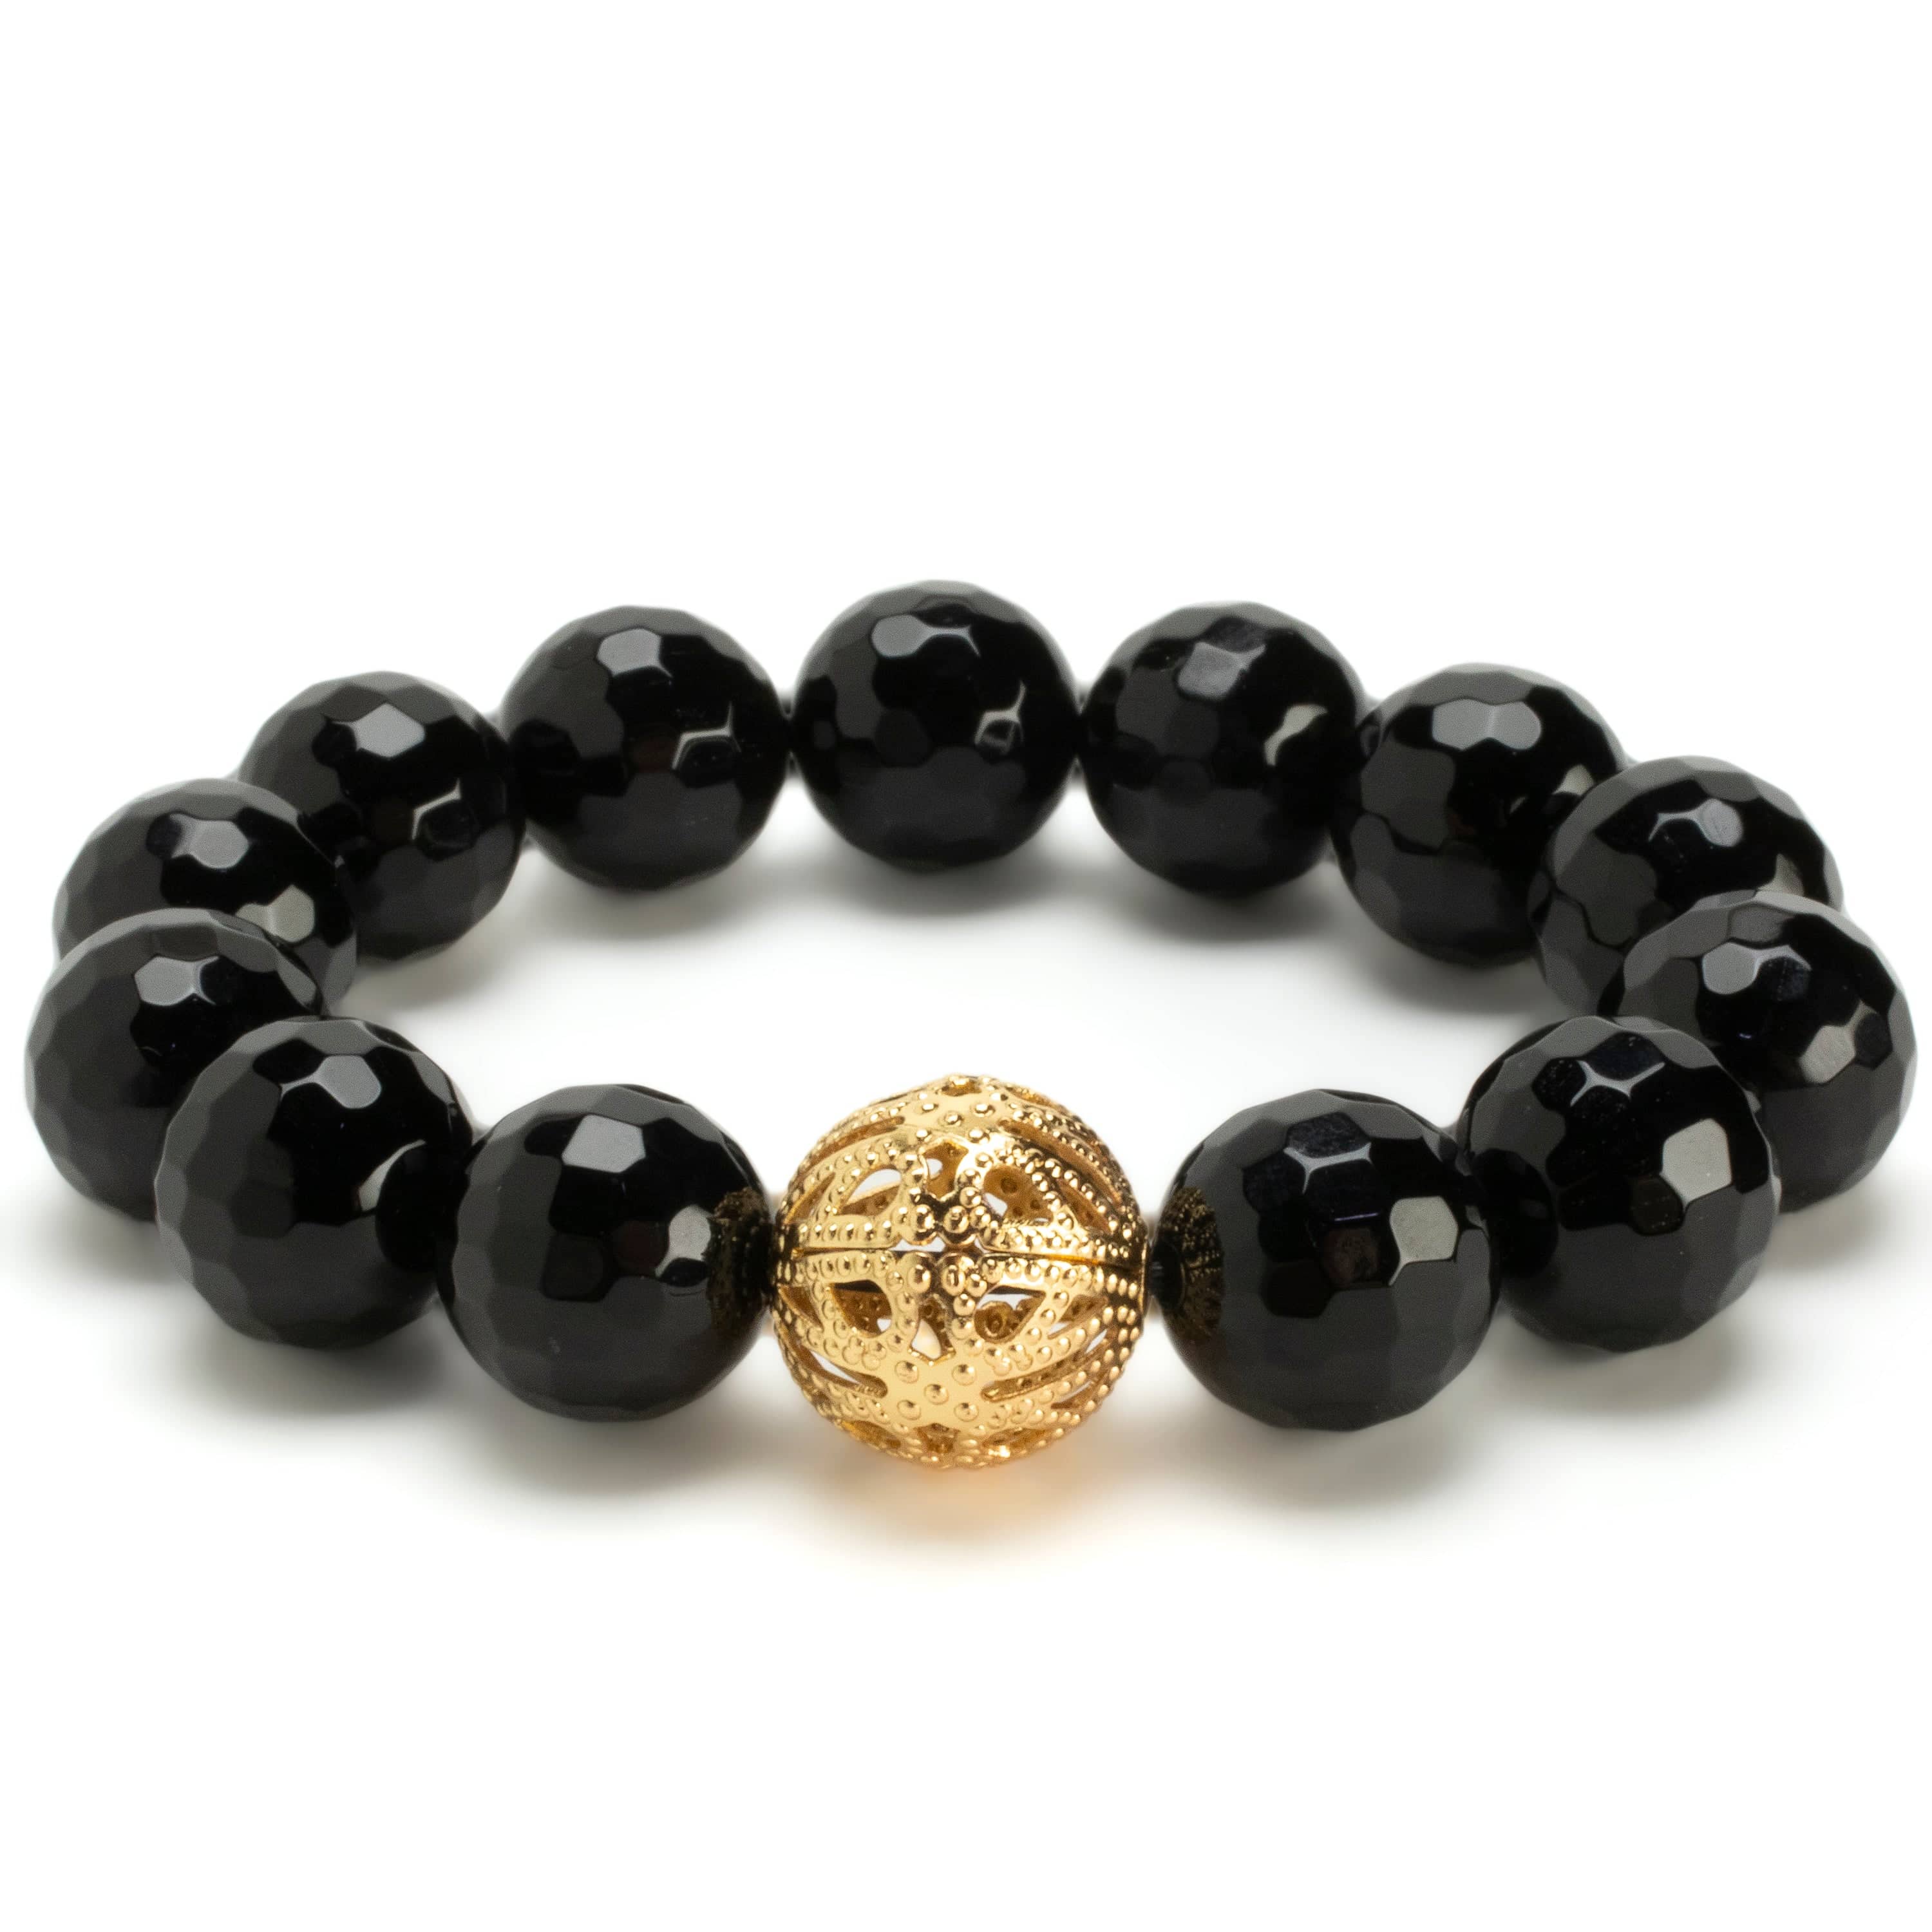 Kalifano Gemstone Bracelets Faceted Black Agate 14mm Gemstone Bead Elastic Bracelet with Gold Accent Bead GOLD-BGP-075